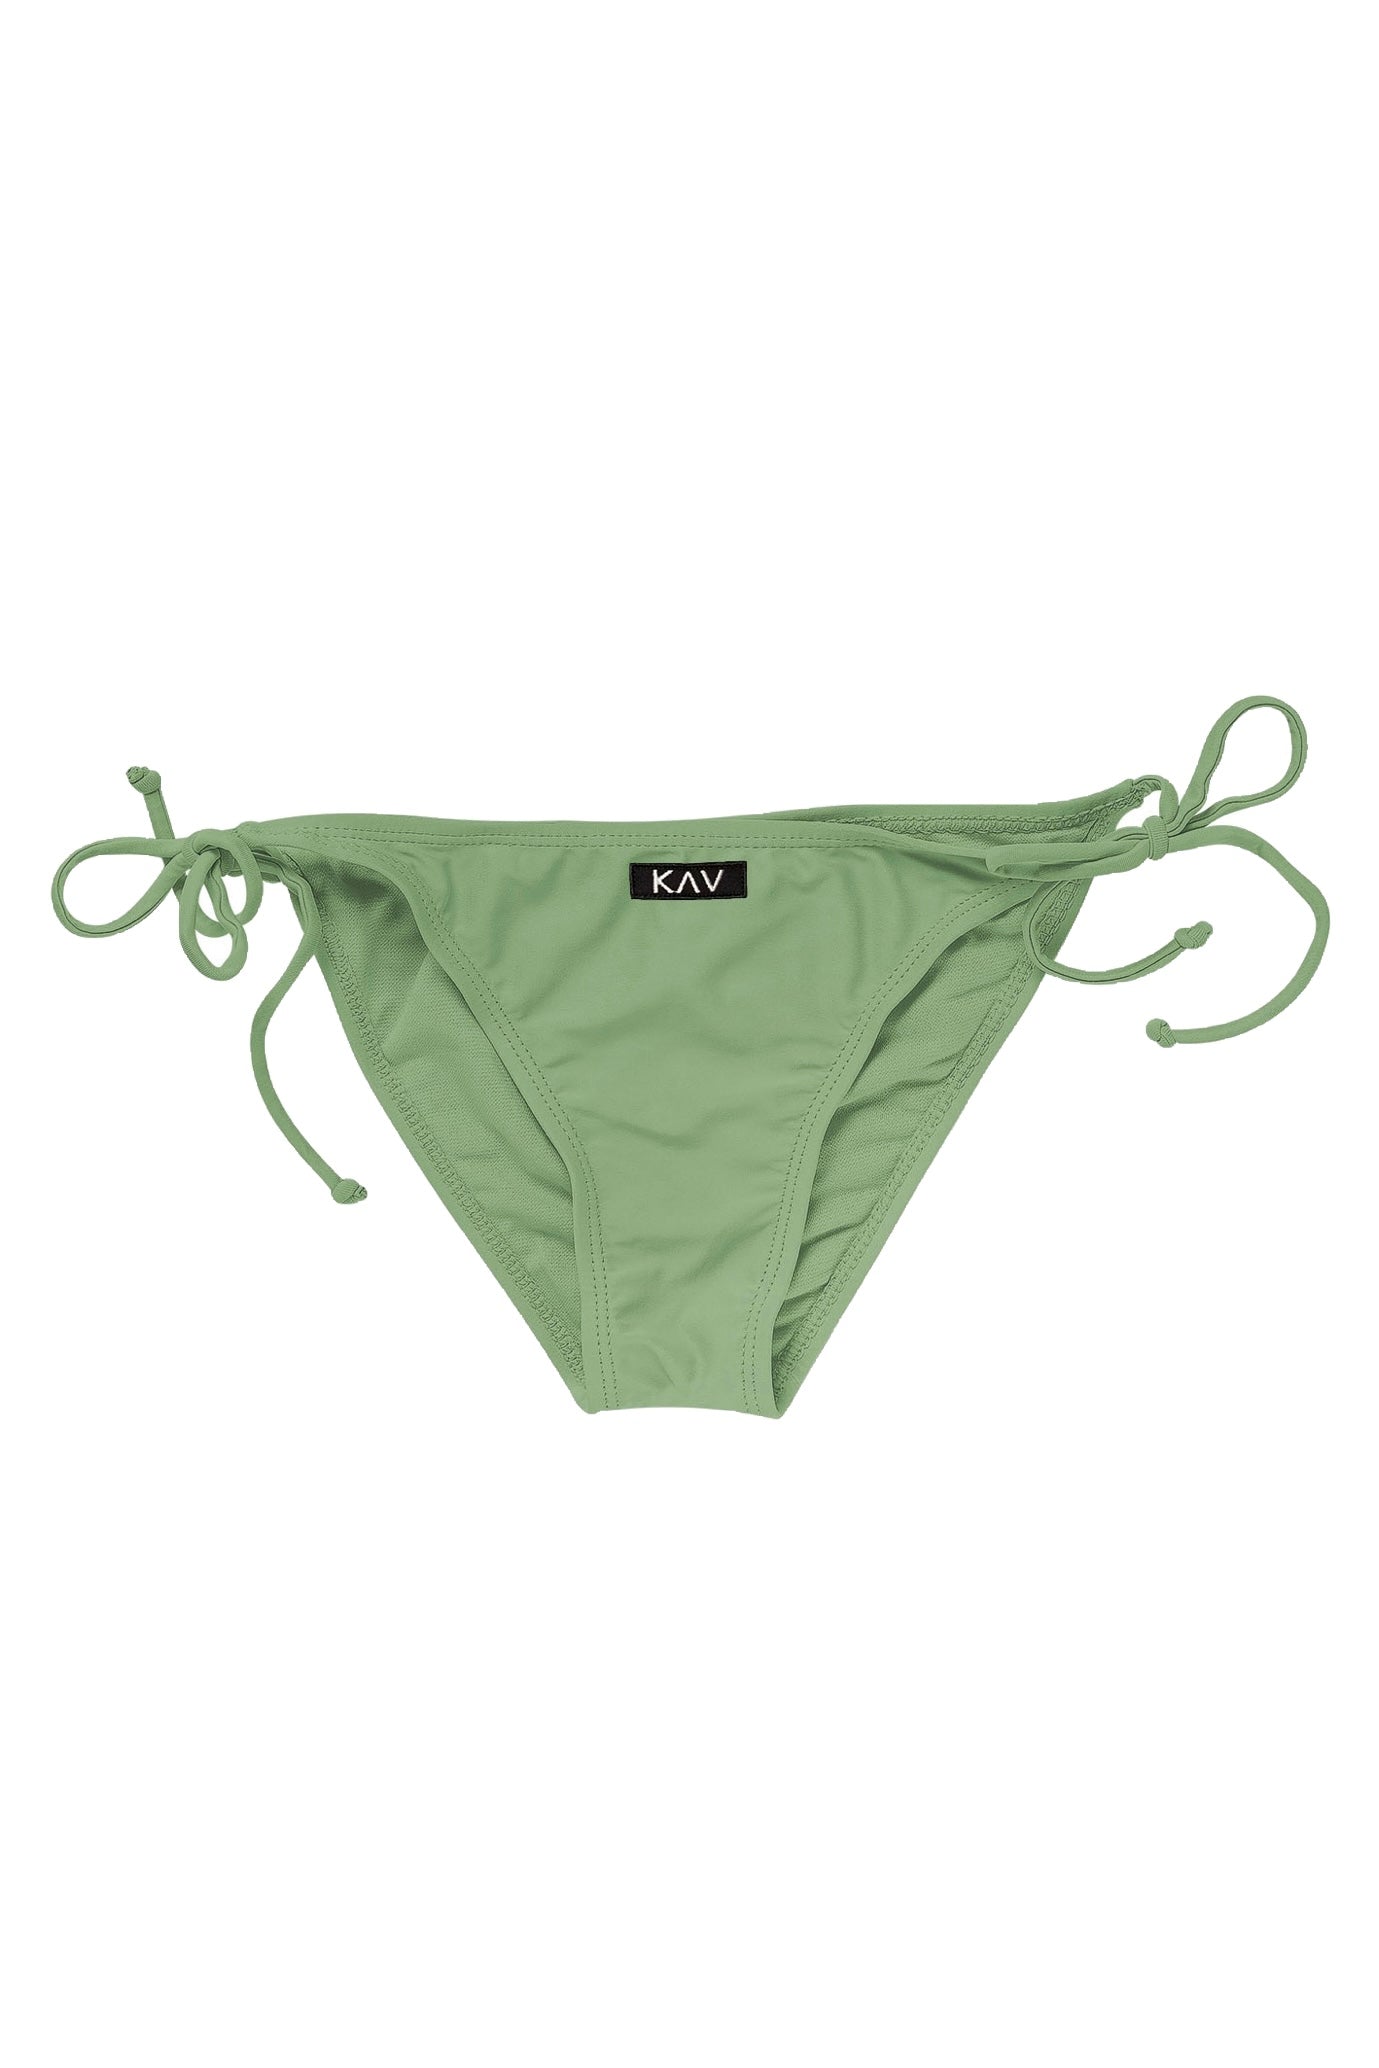 Olive Green Swim Minimal Tie Bottom